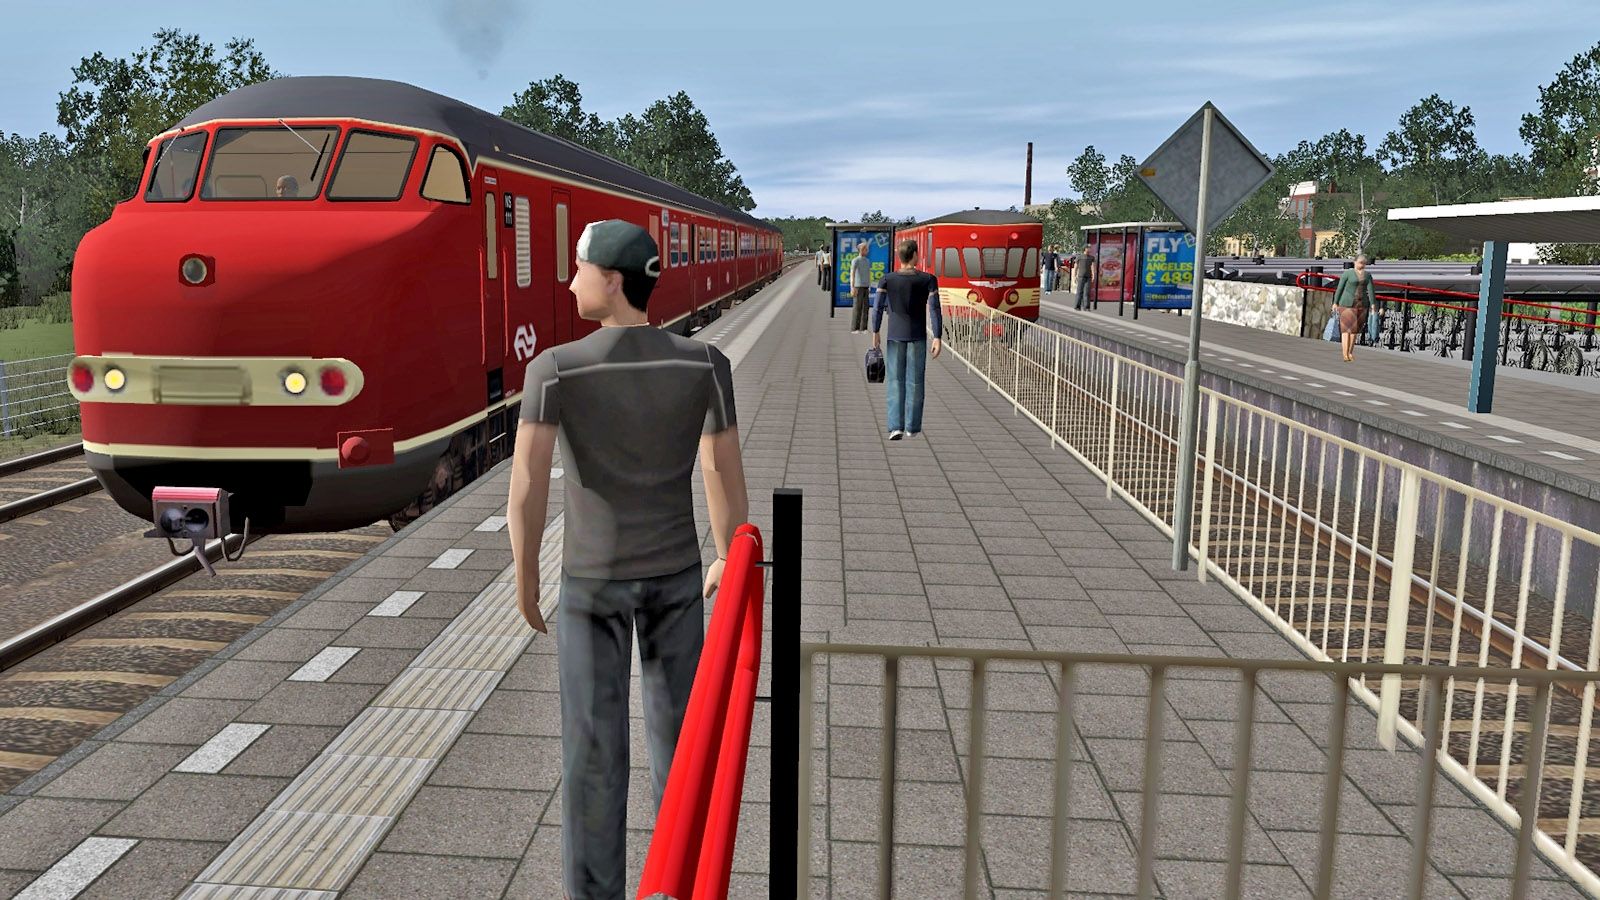 The-Railway-Station-of-Winschoten%2C-right-on-the-platforms.jpg